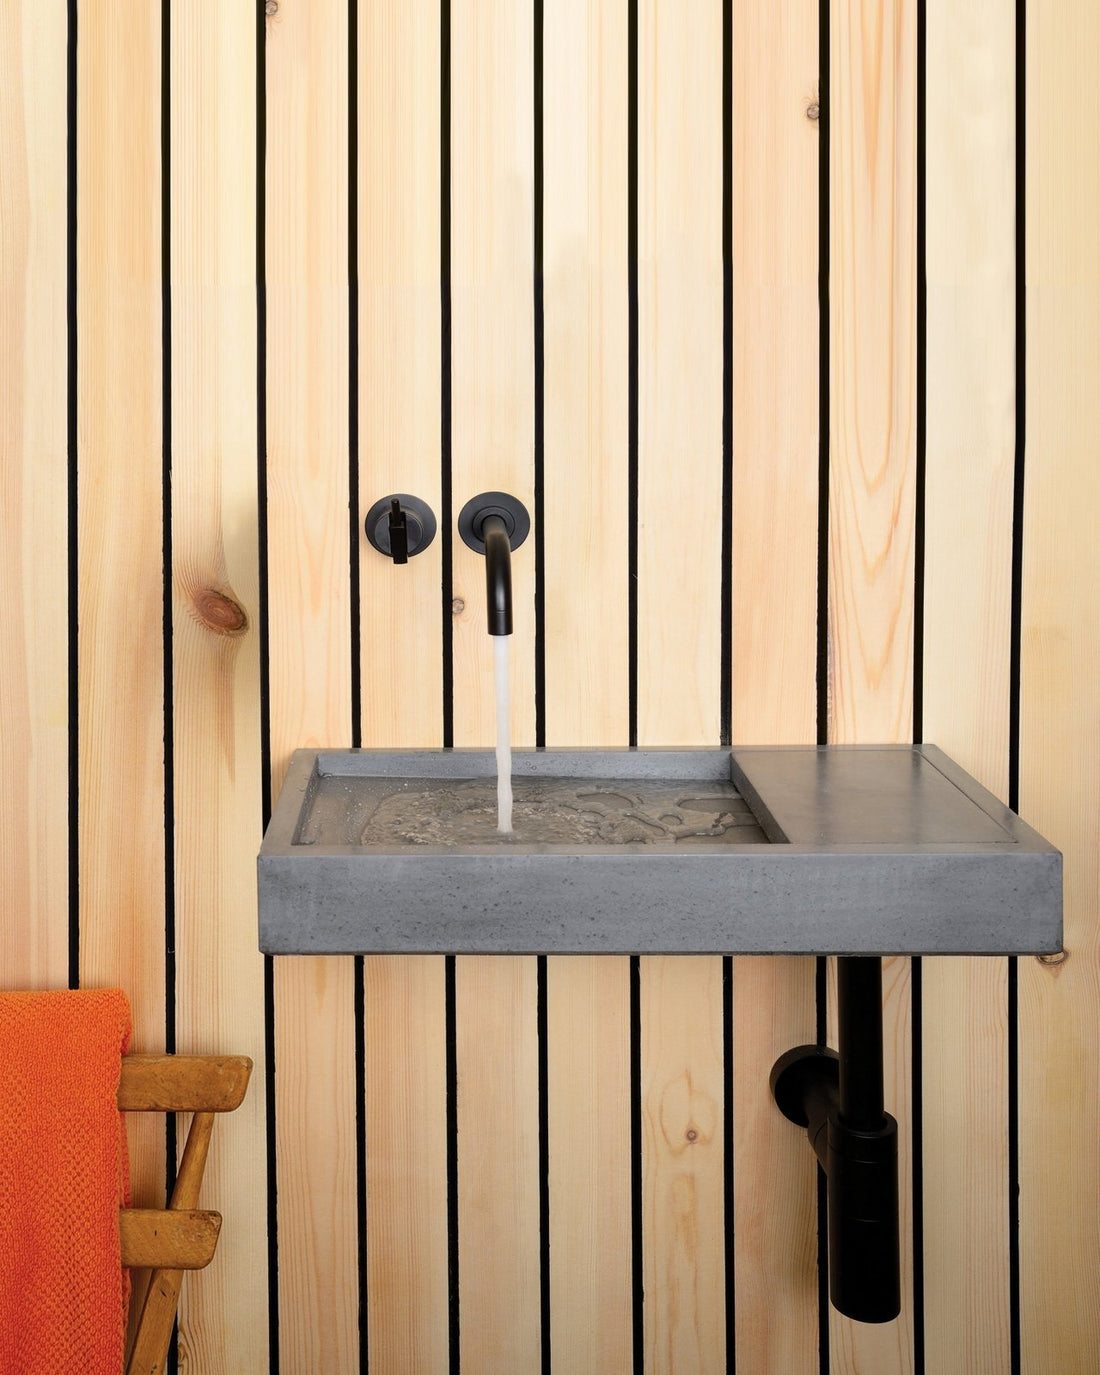 KAST Concrete bathroom sinks - Flor Mini A1 (Iron) - Artisan Basins Company